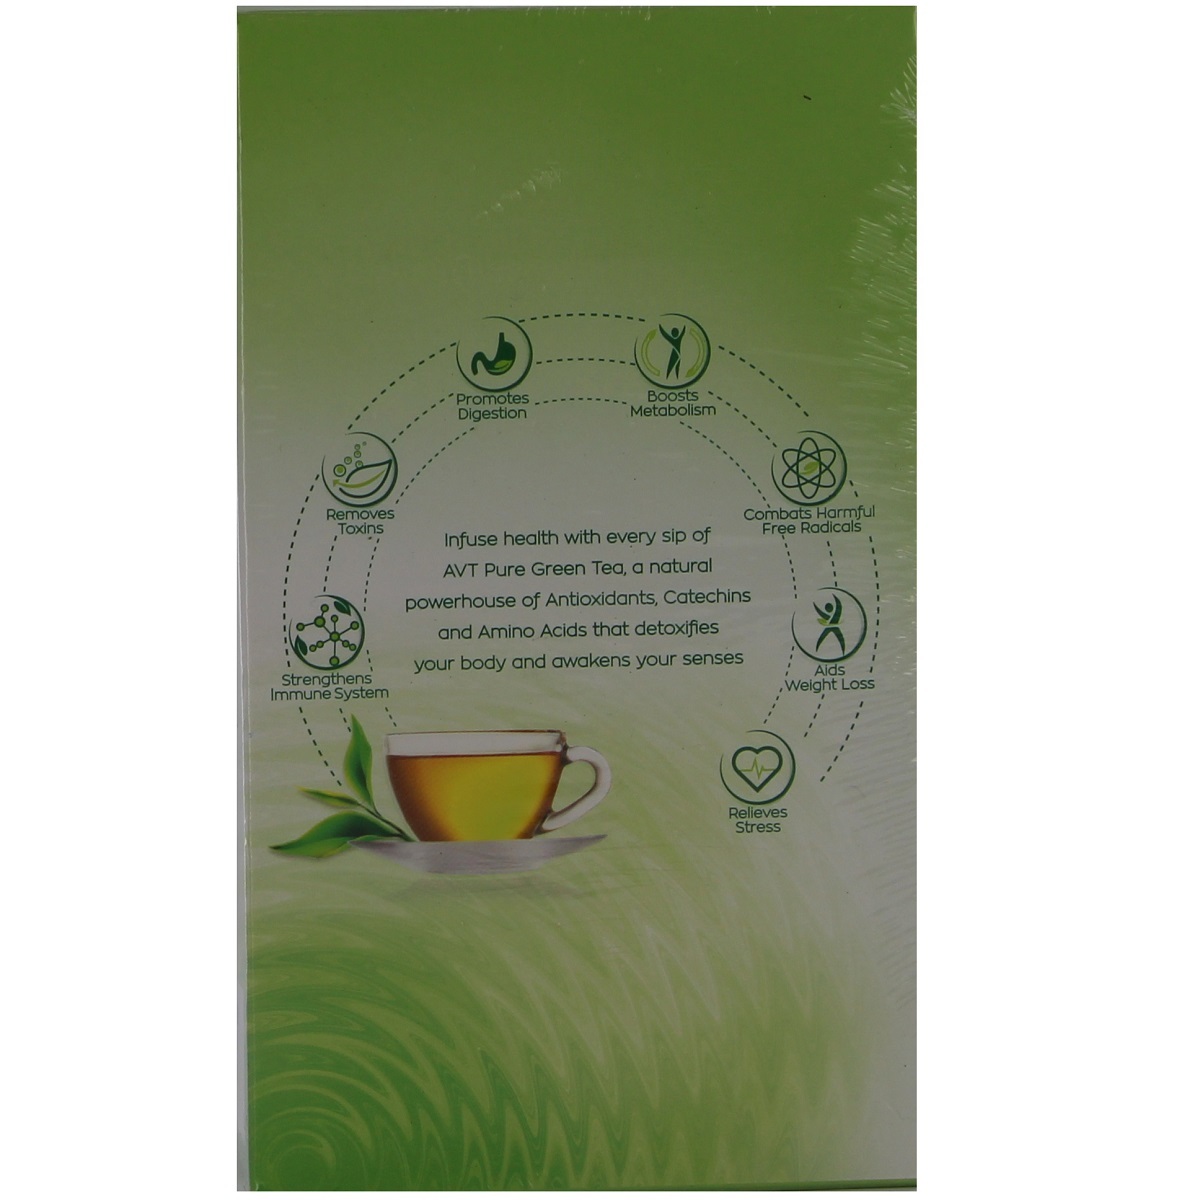 Avt Green Tea Duplex Carton 250g